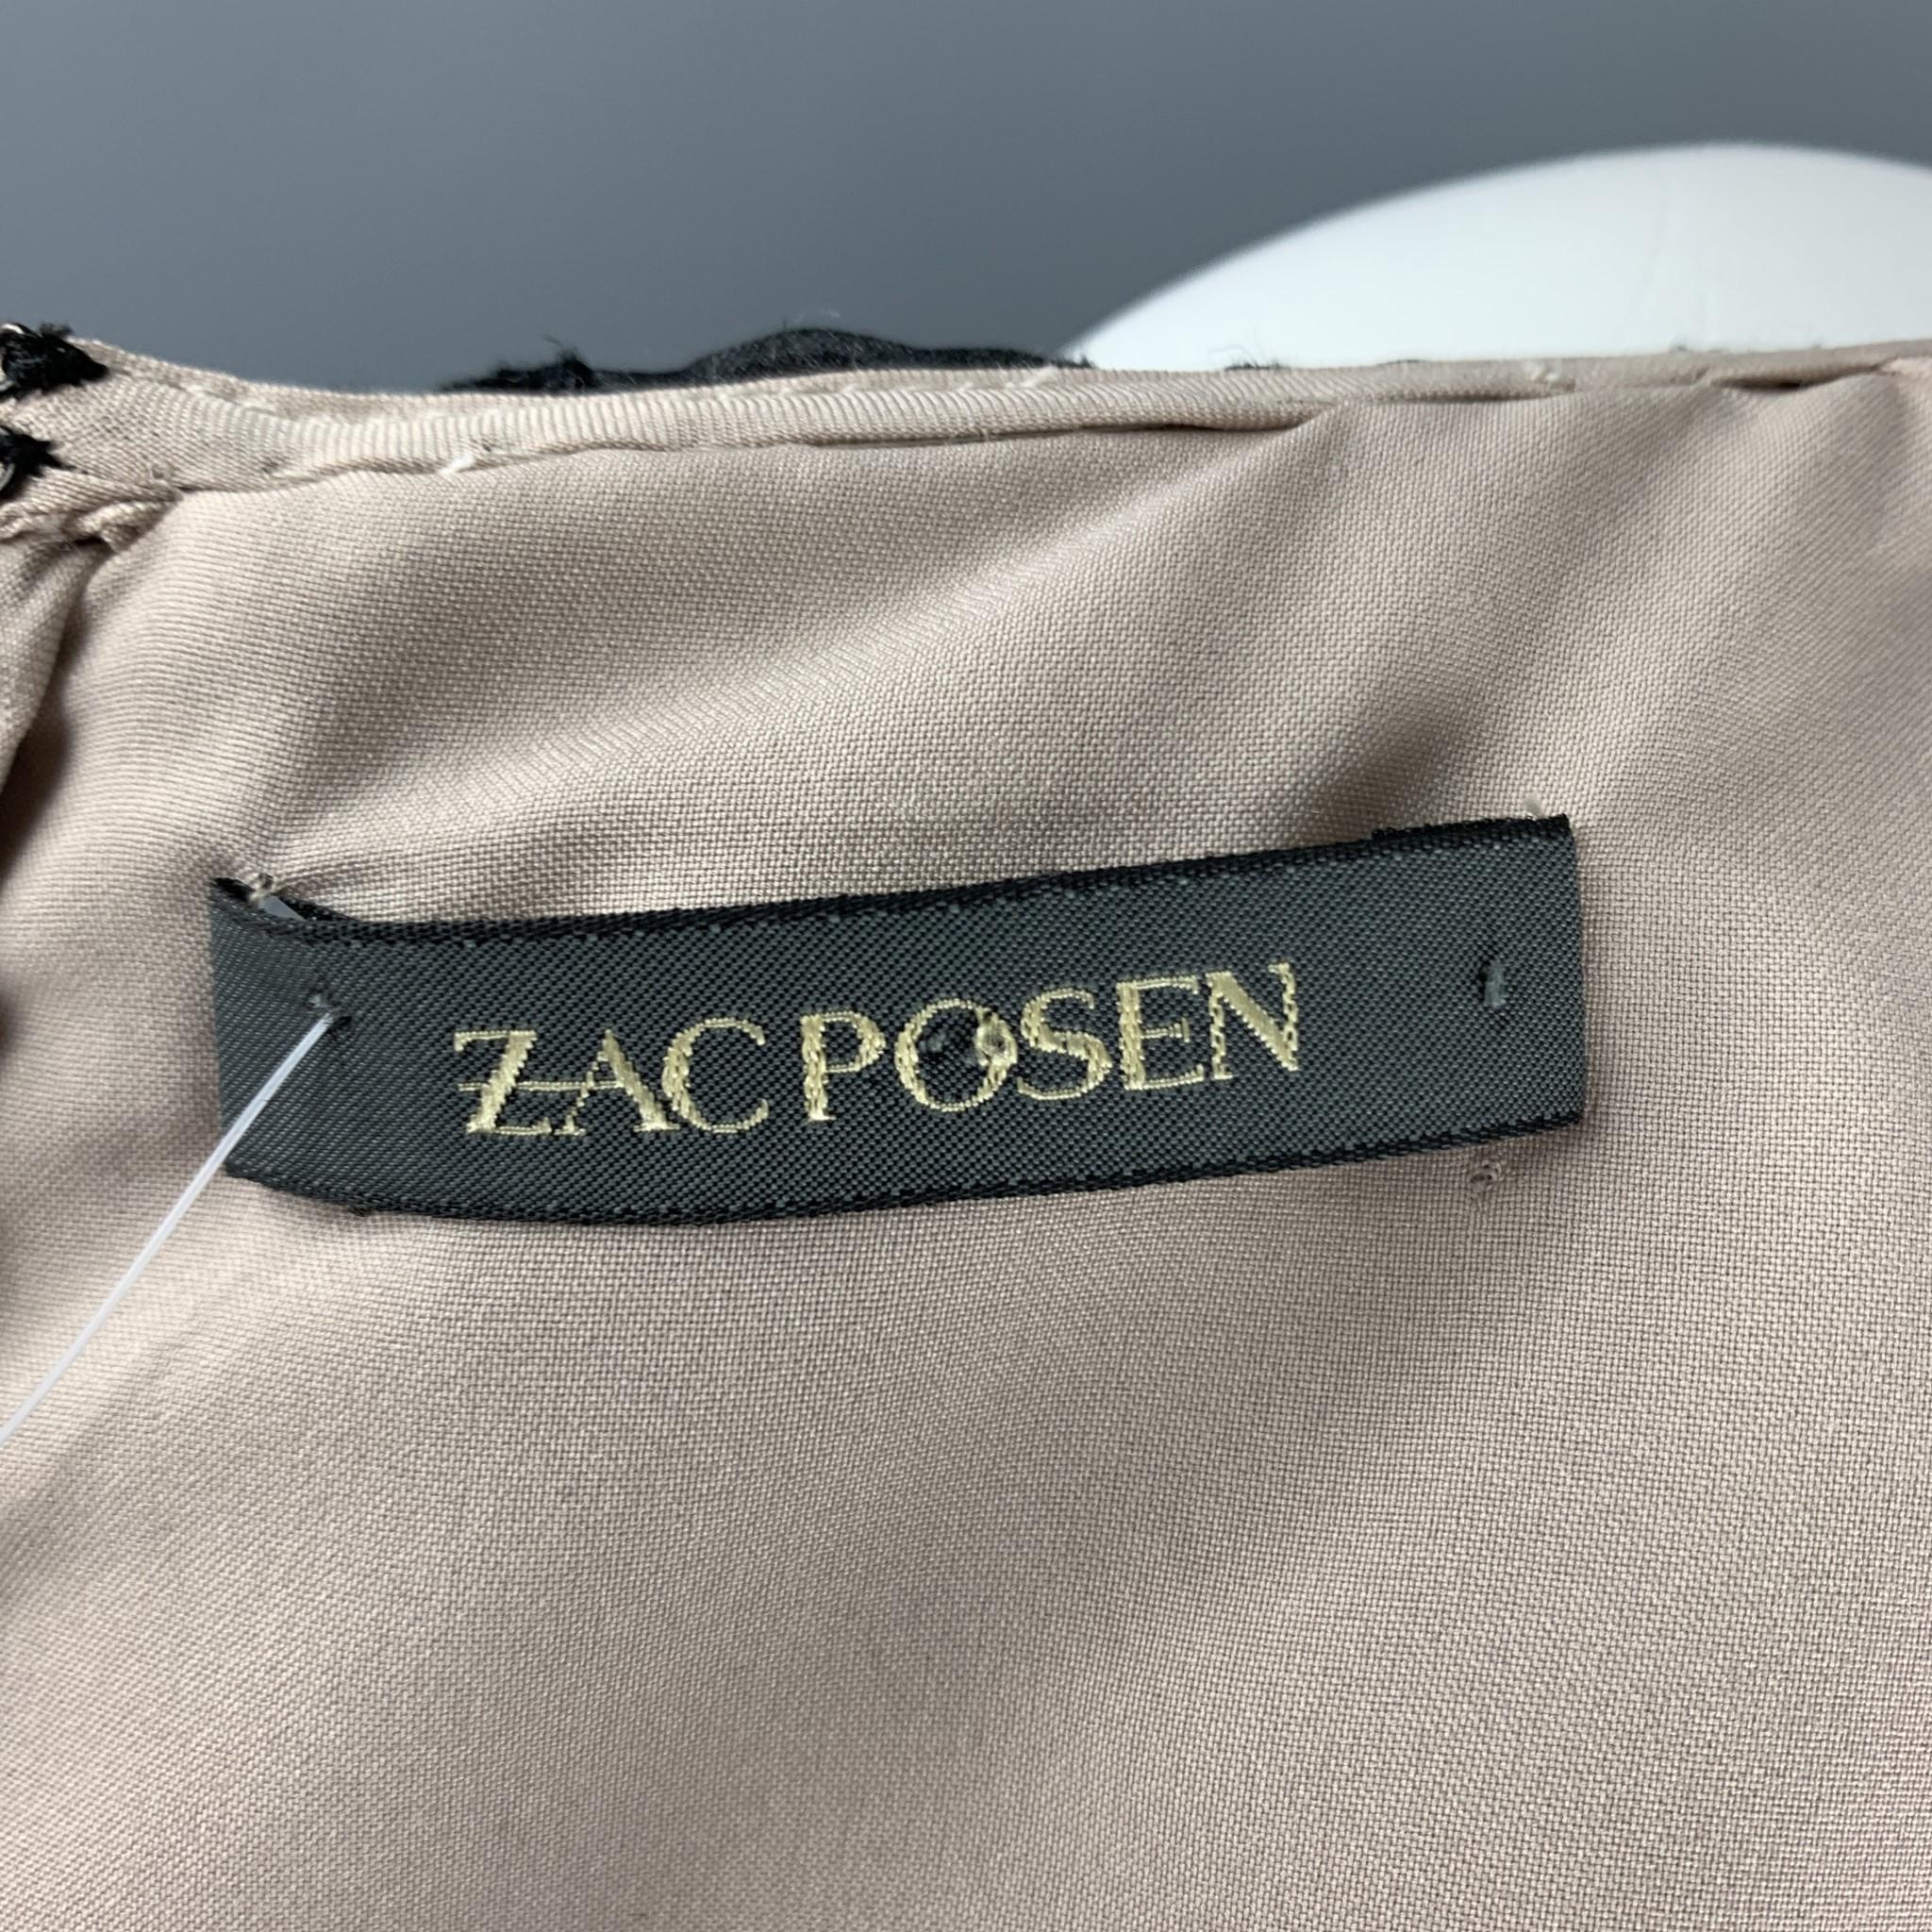 ZAC POSEN Size 6 Black Lace Ruffle Trumpet Skirt Cocktail Dress 3